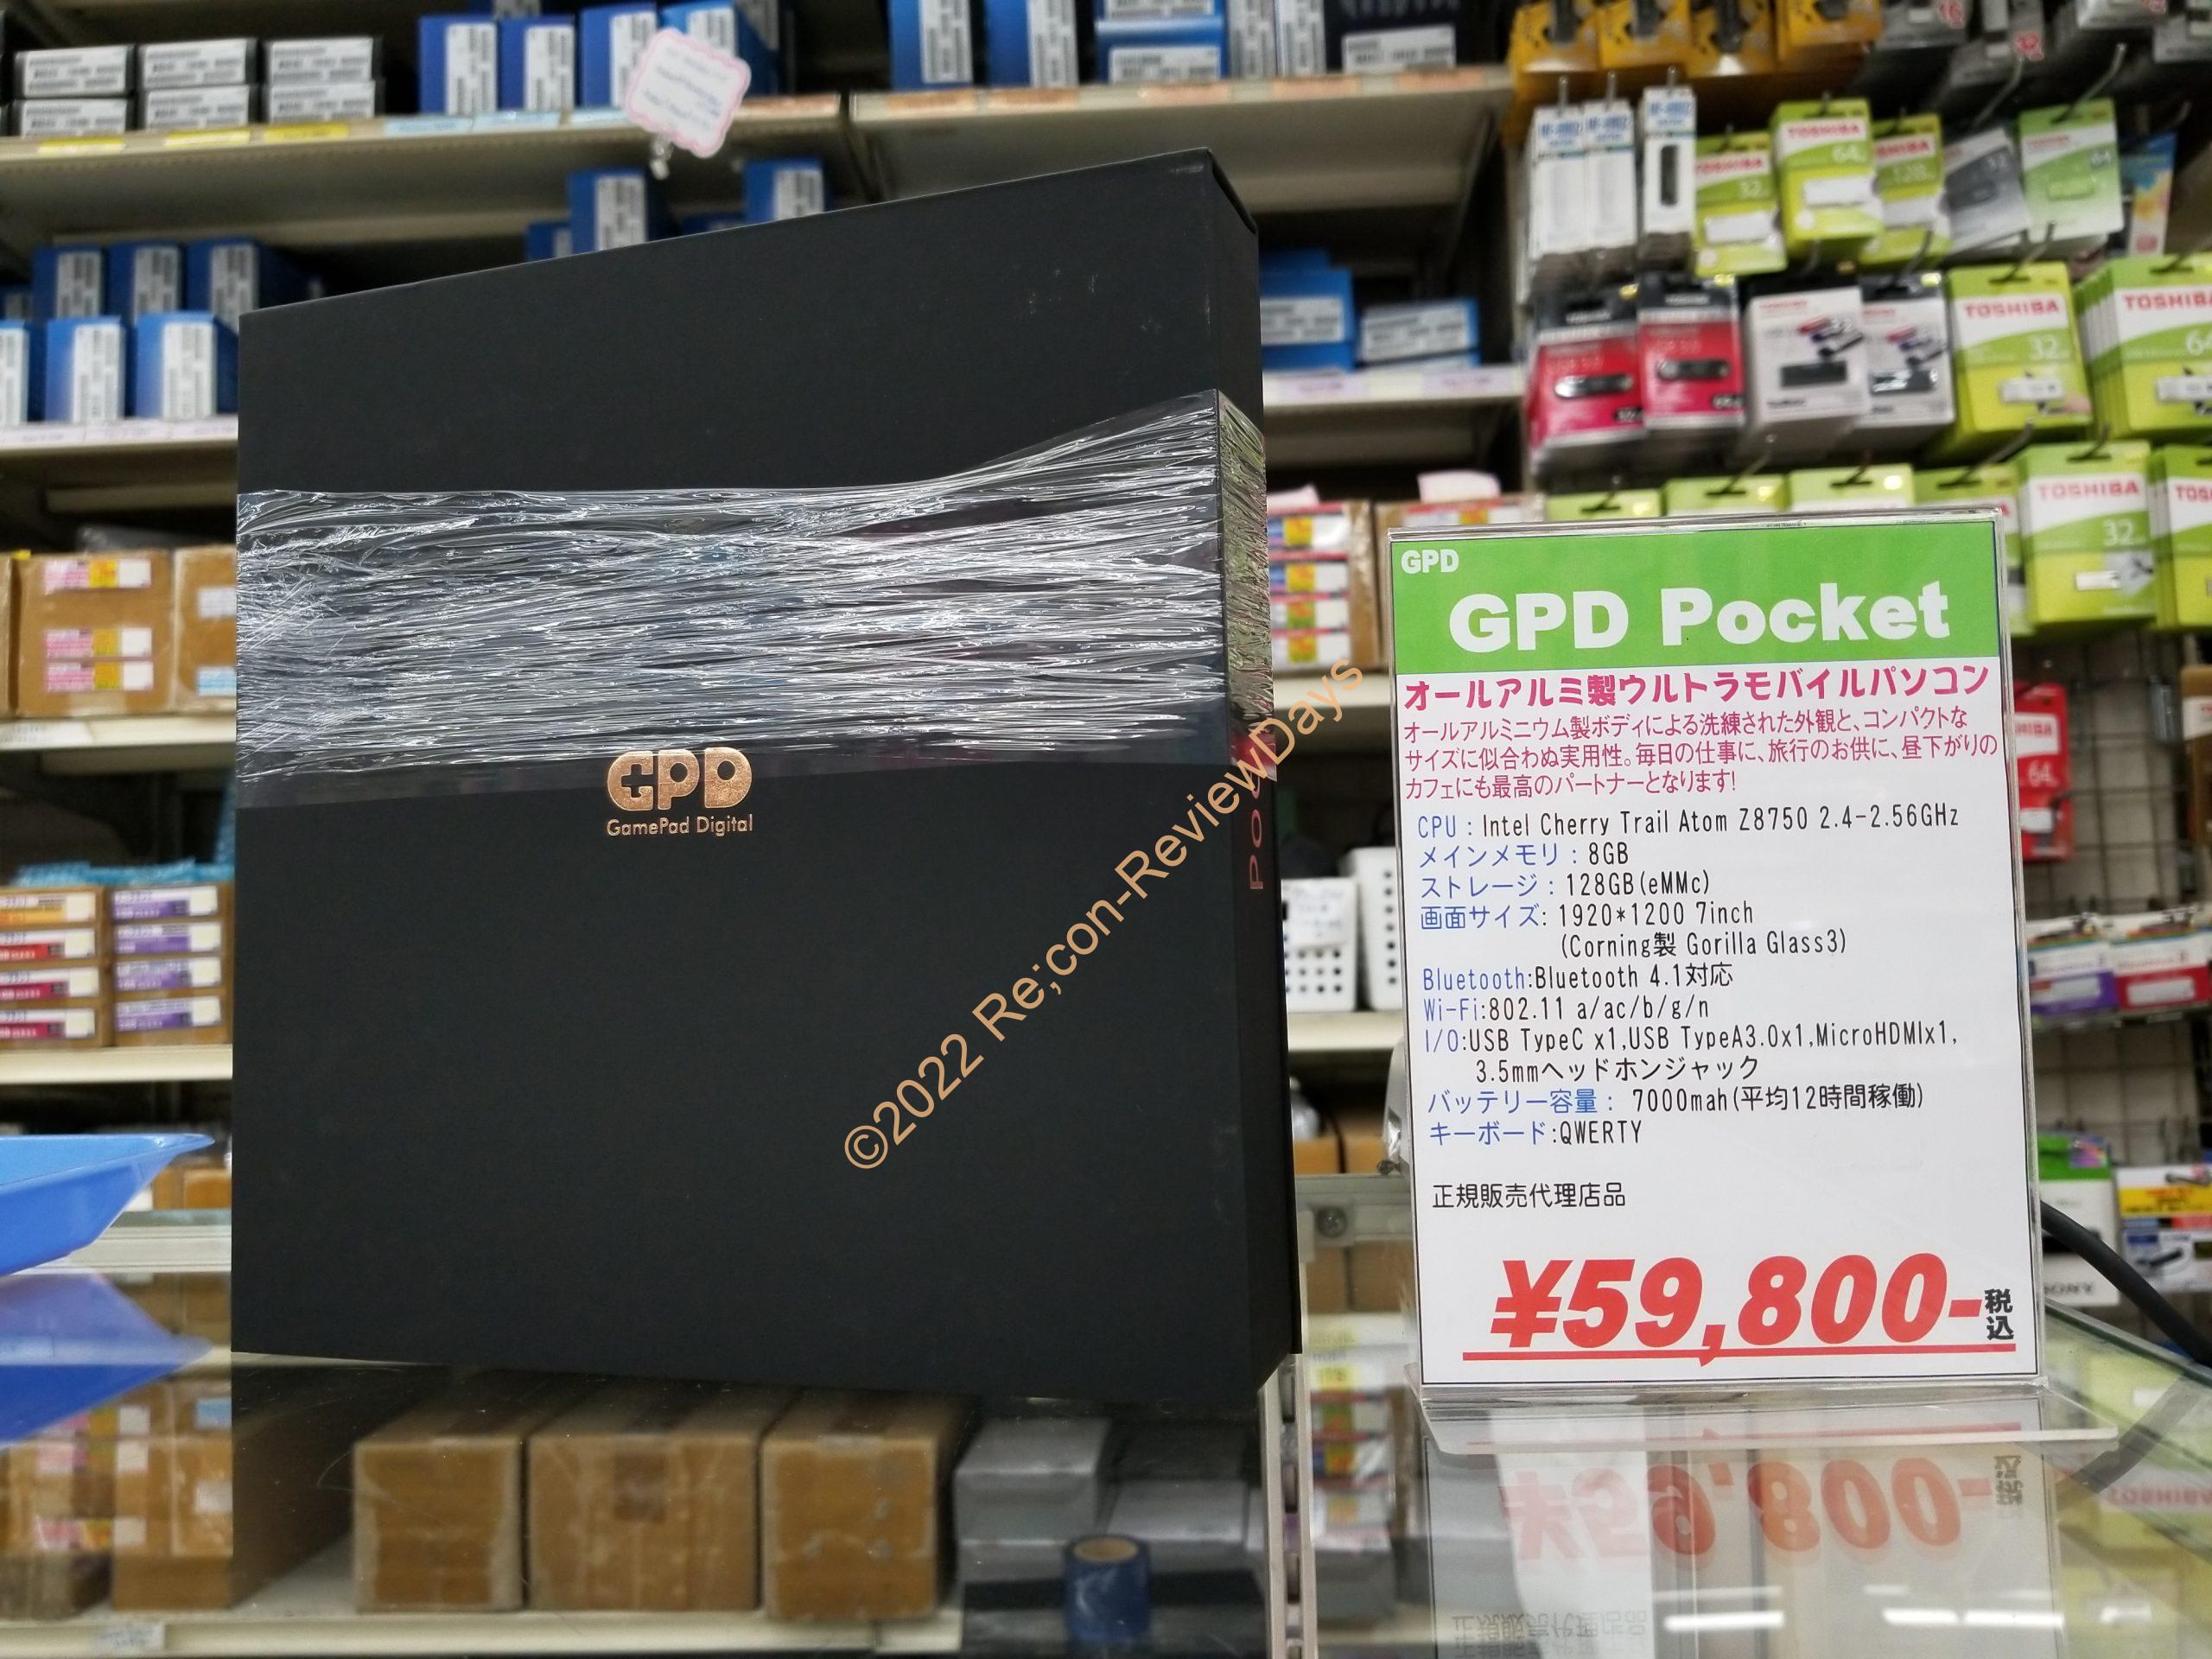 PCワンズにて国内正規販売店版GPD Pocketを販売開始、59,800円、送料無料で在庫あり #GPD #GPDPocket #pombashi #自作PC